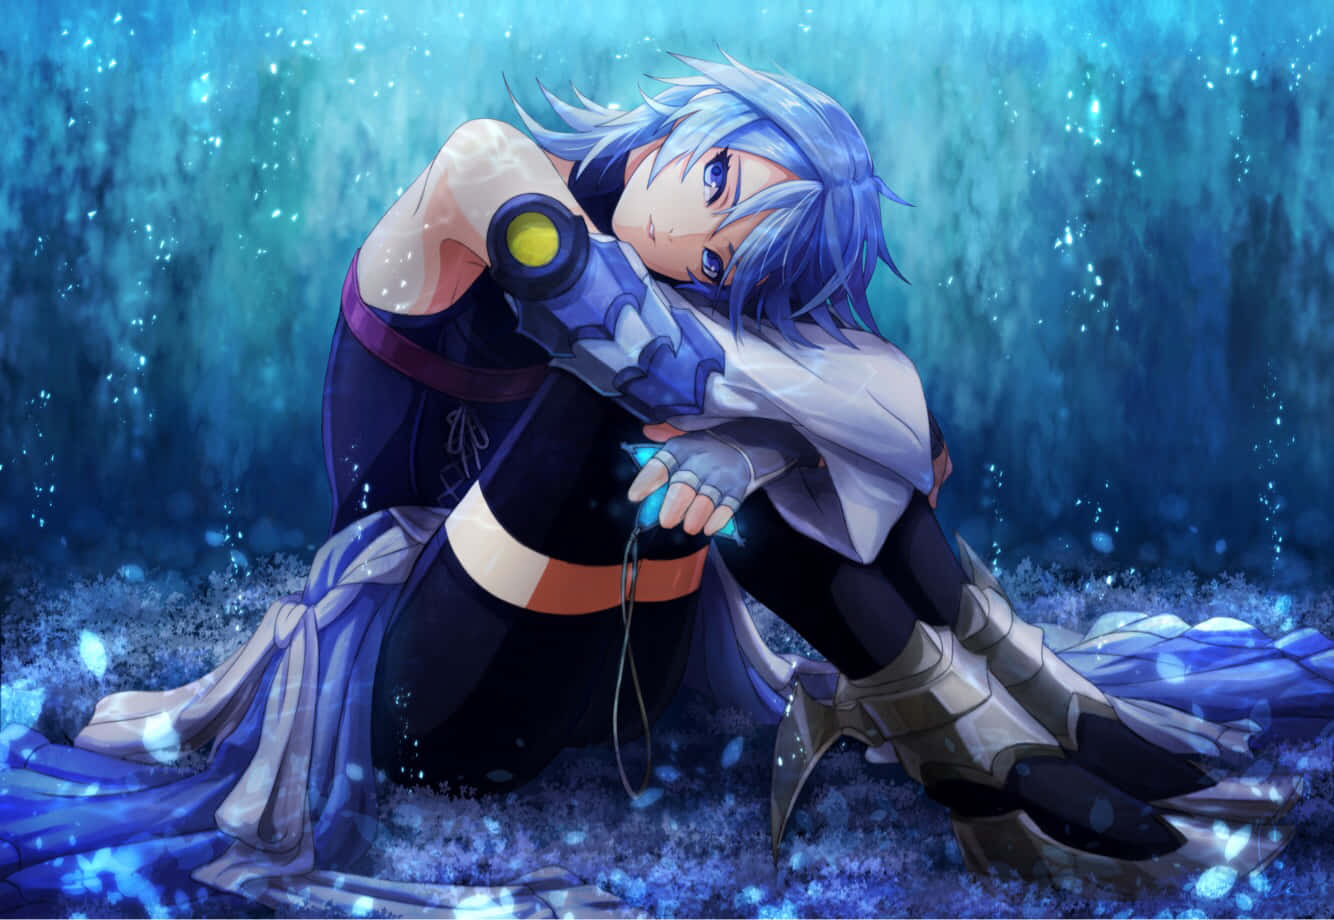 The Protector of Light - Aqua from Kingdom Hearts Wallpaper